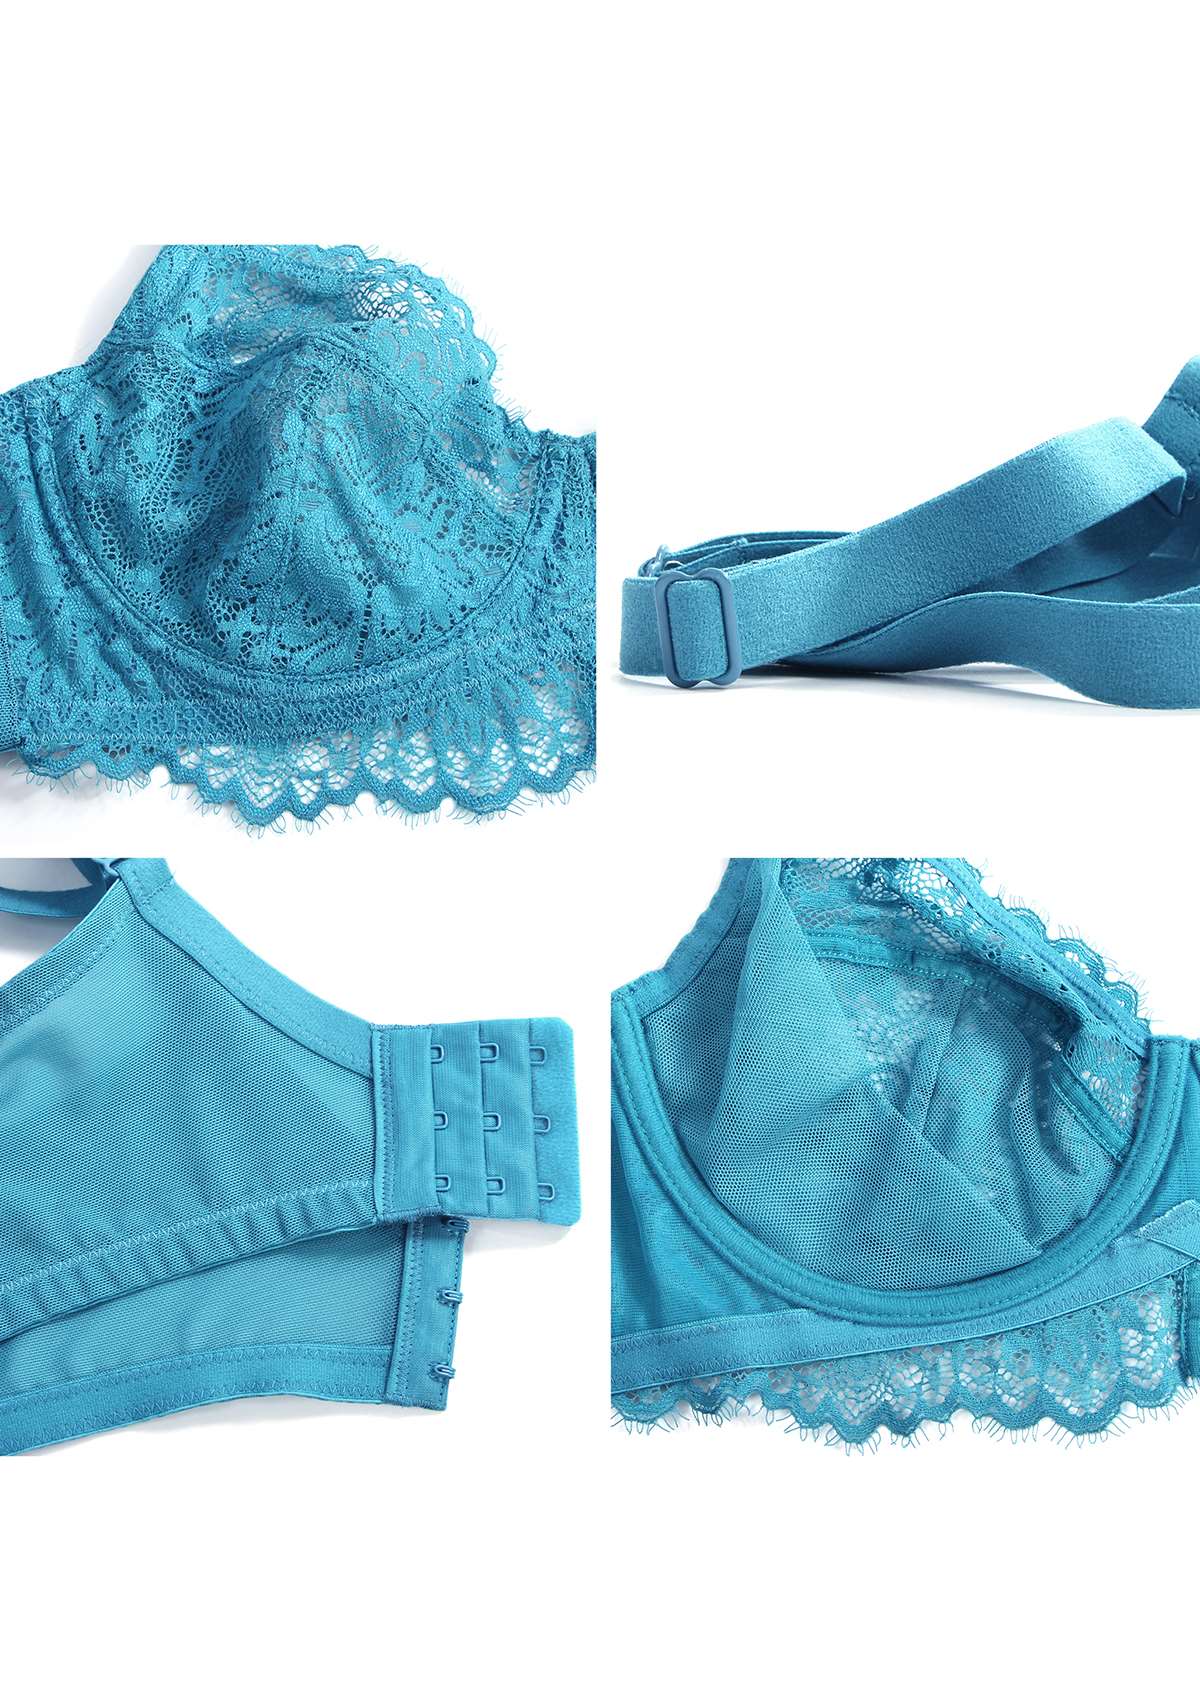 HSIA Sunflower Lace Bra And Panty: Cute Plus Size Comfort Bra - Horizon Blue / 46 / DD/E